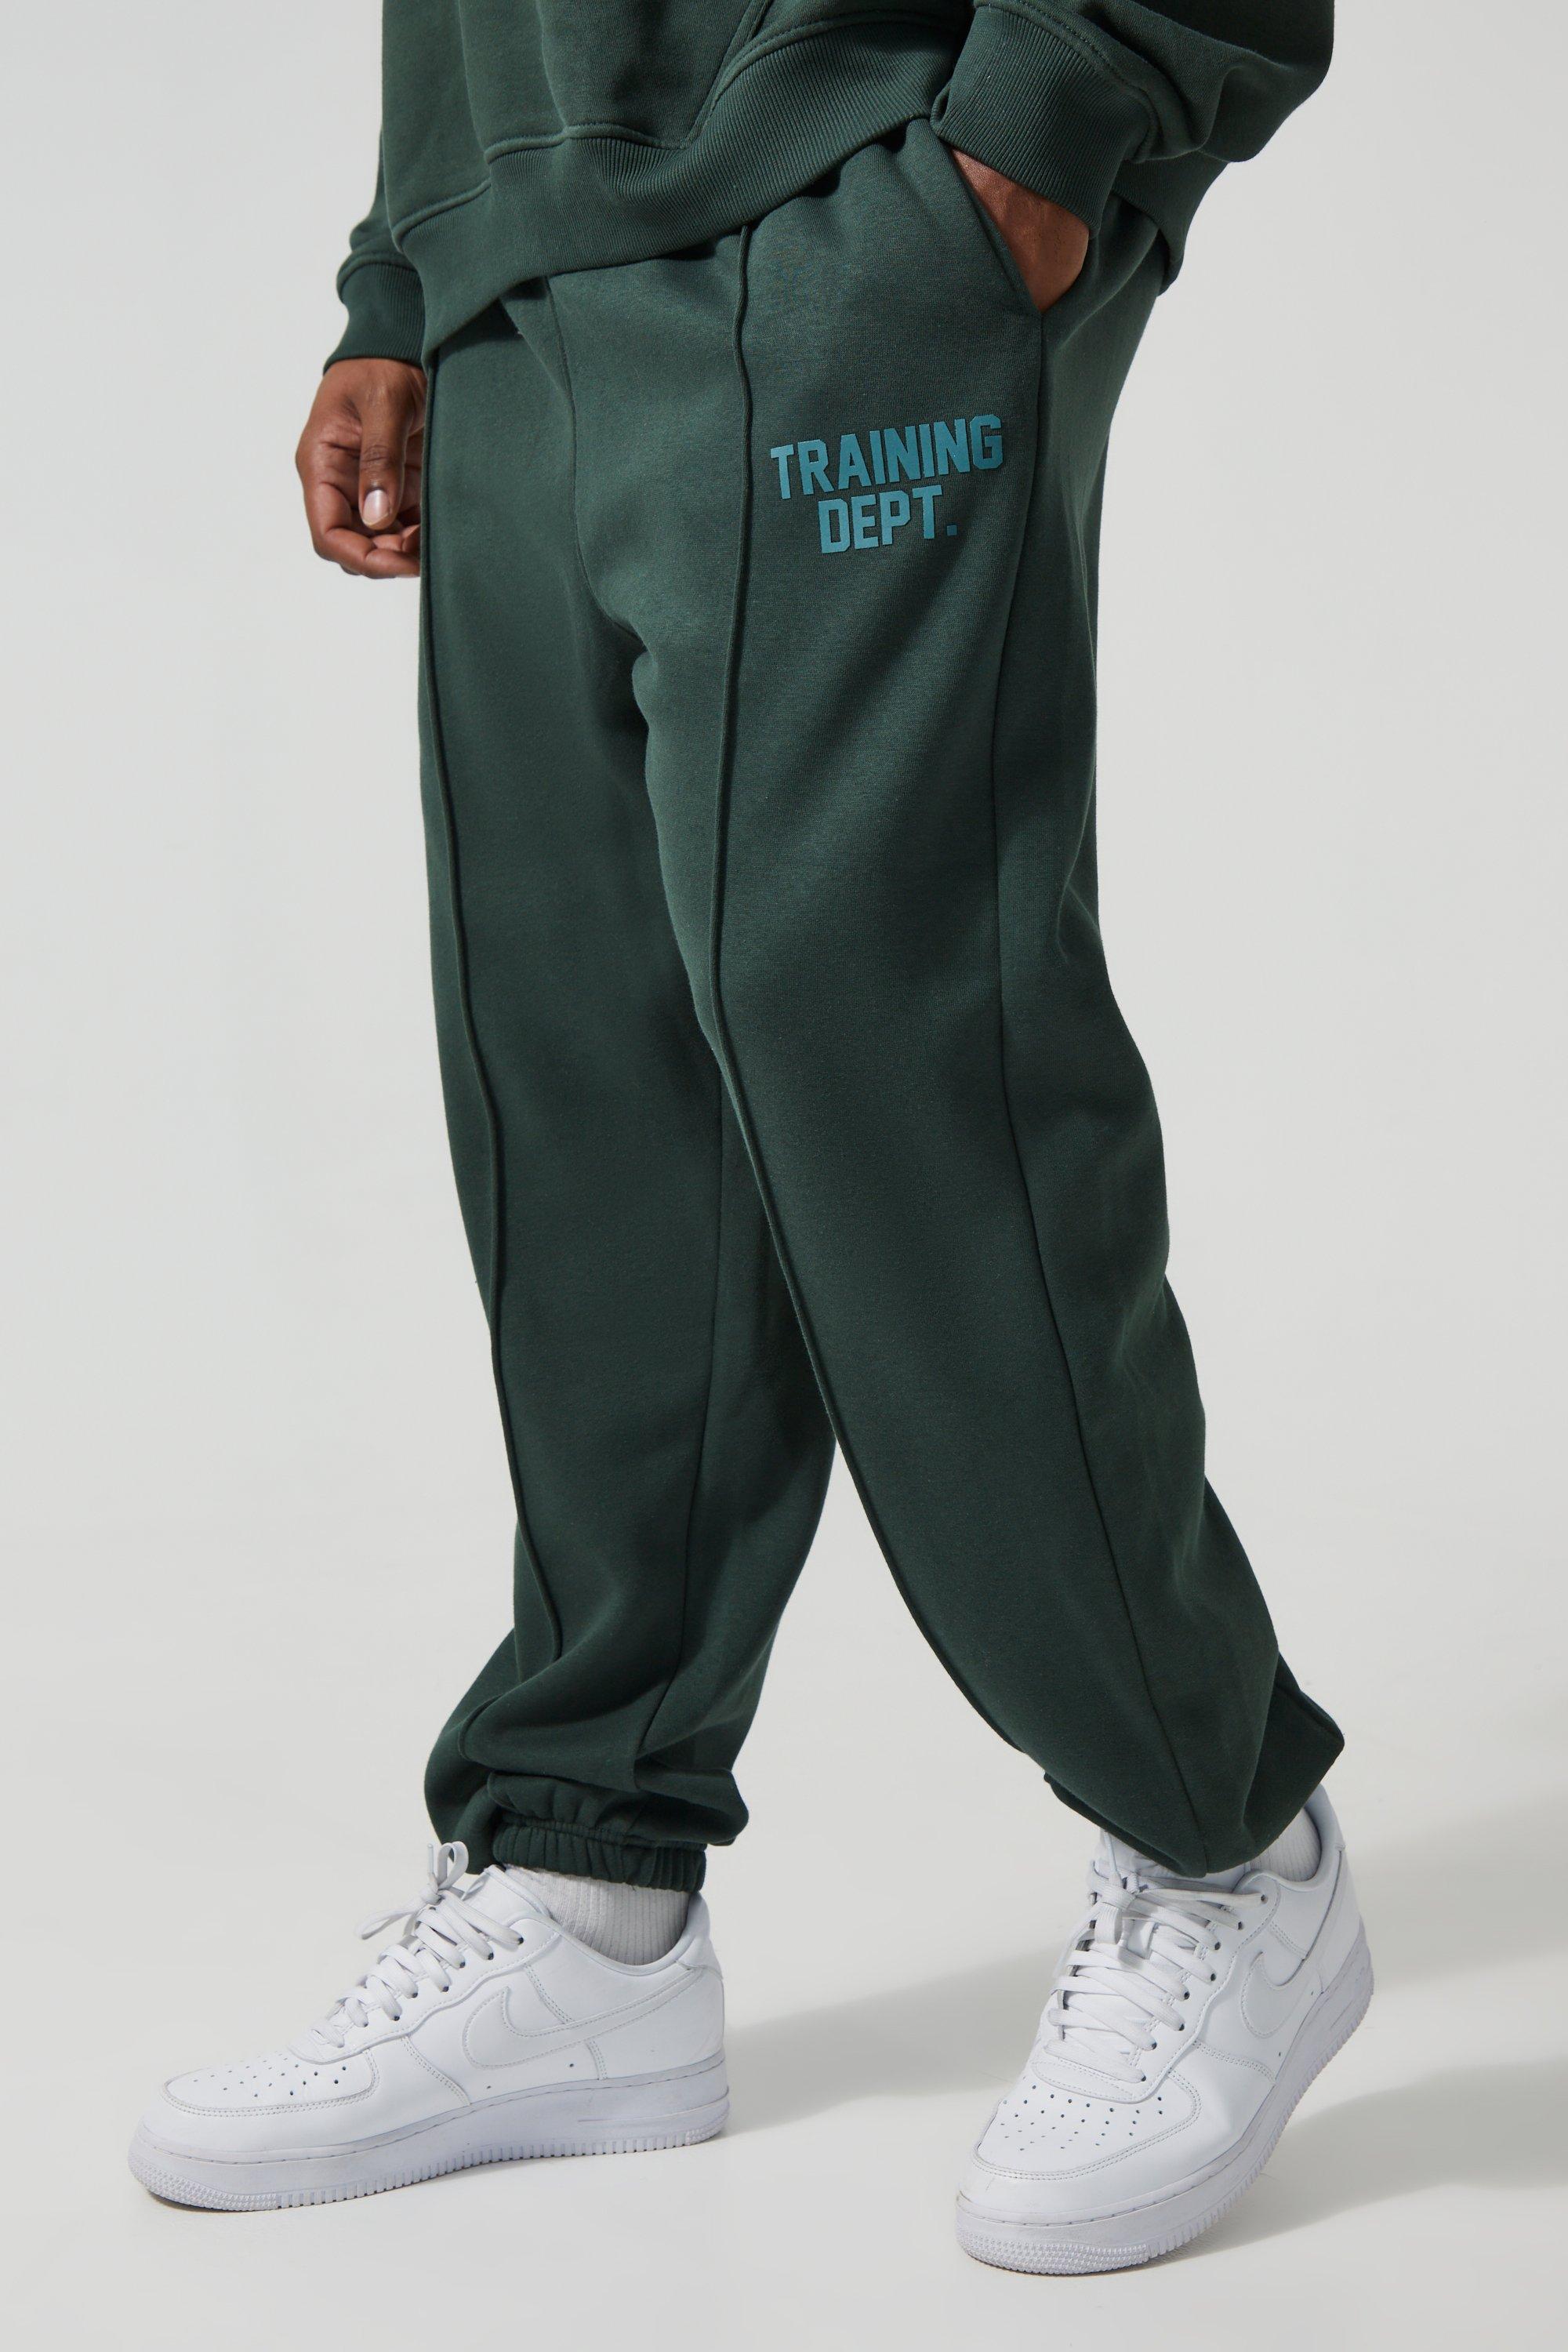 Image of Pantaloni tuta Plus Size Active Training Dept Slim Fit, Verde